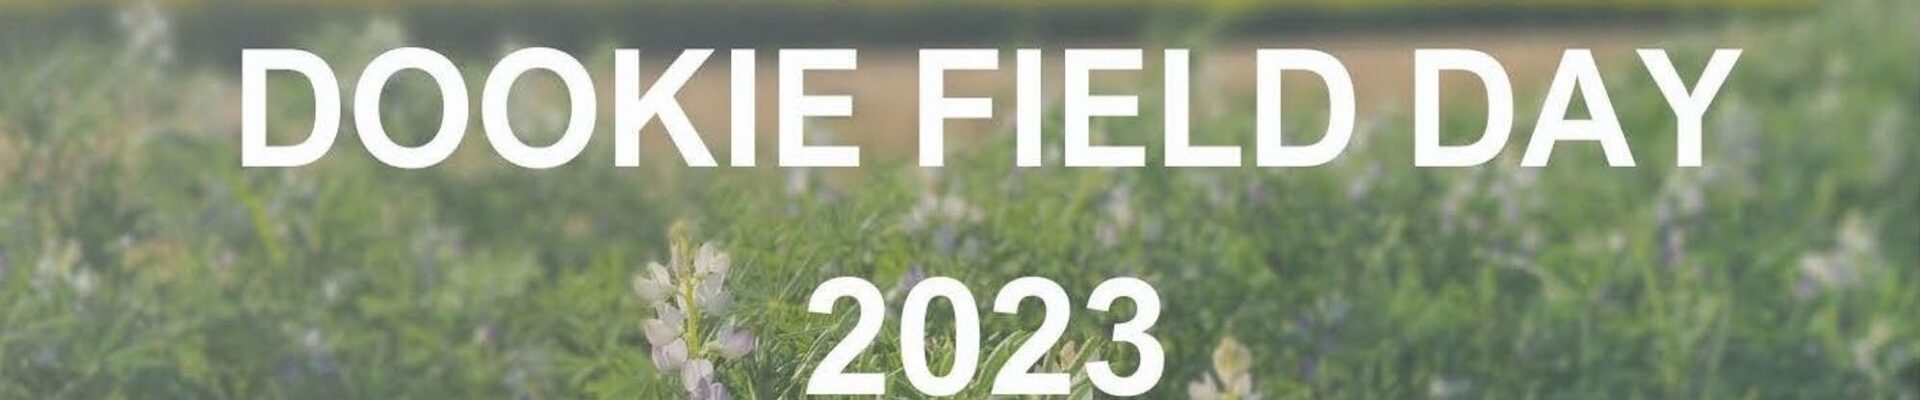 Dookie Field Day 2023 2000px